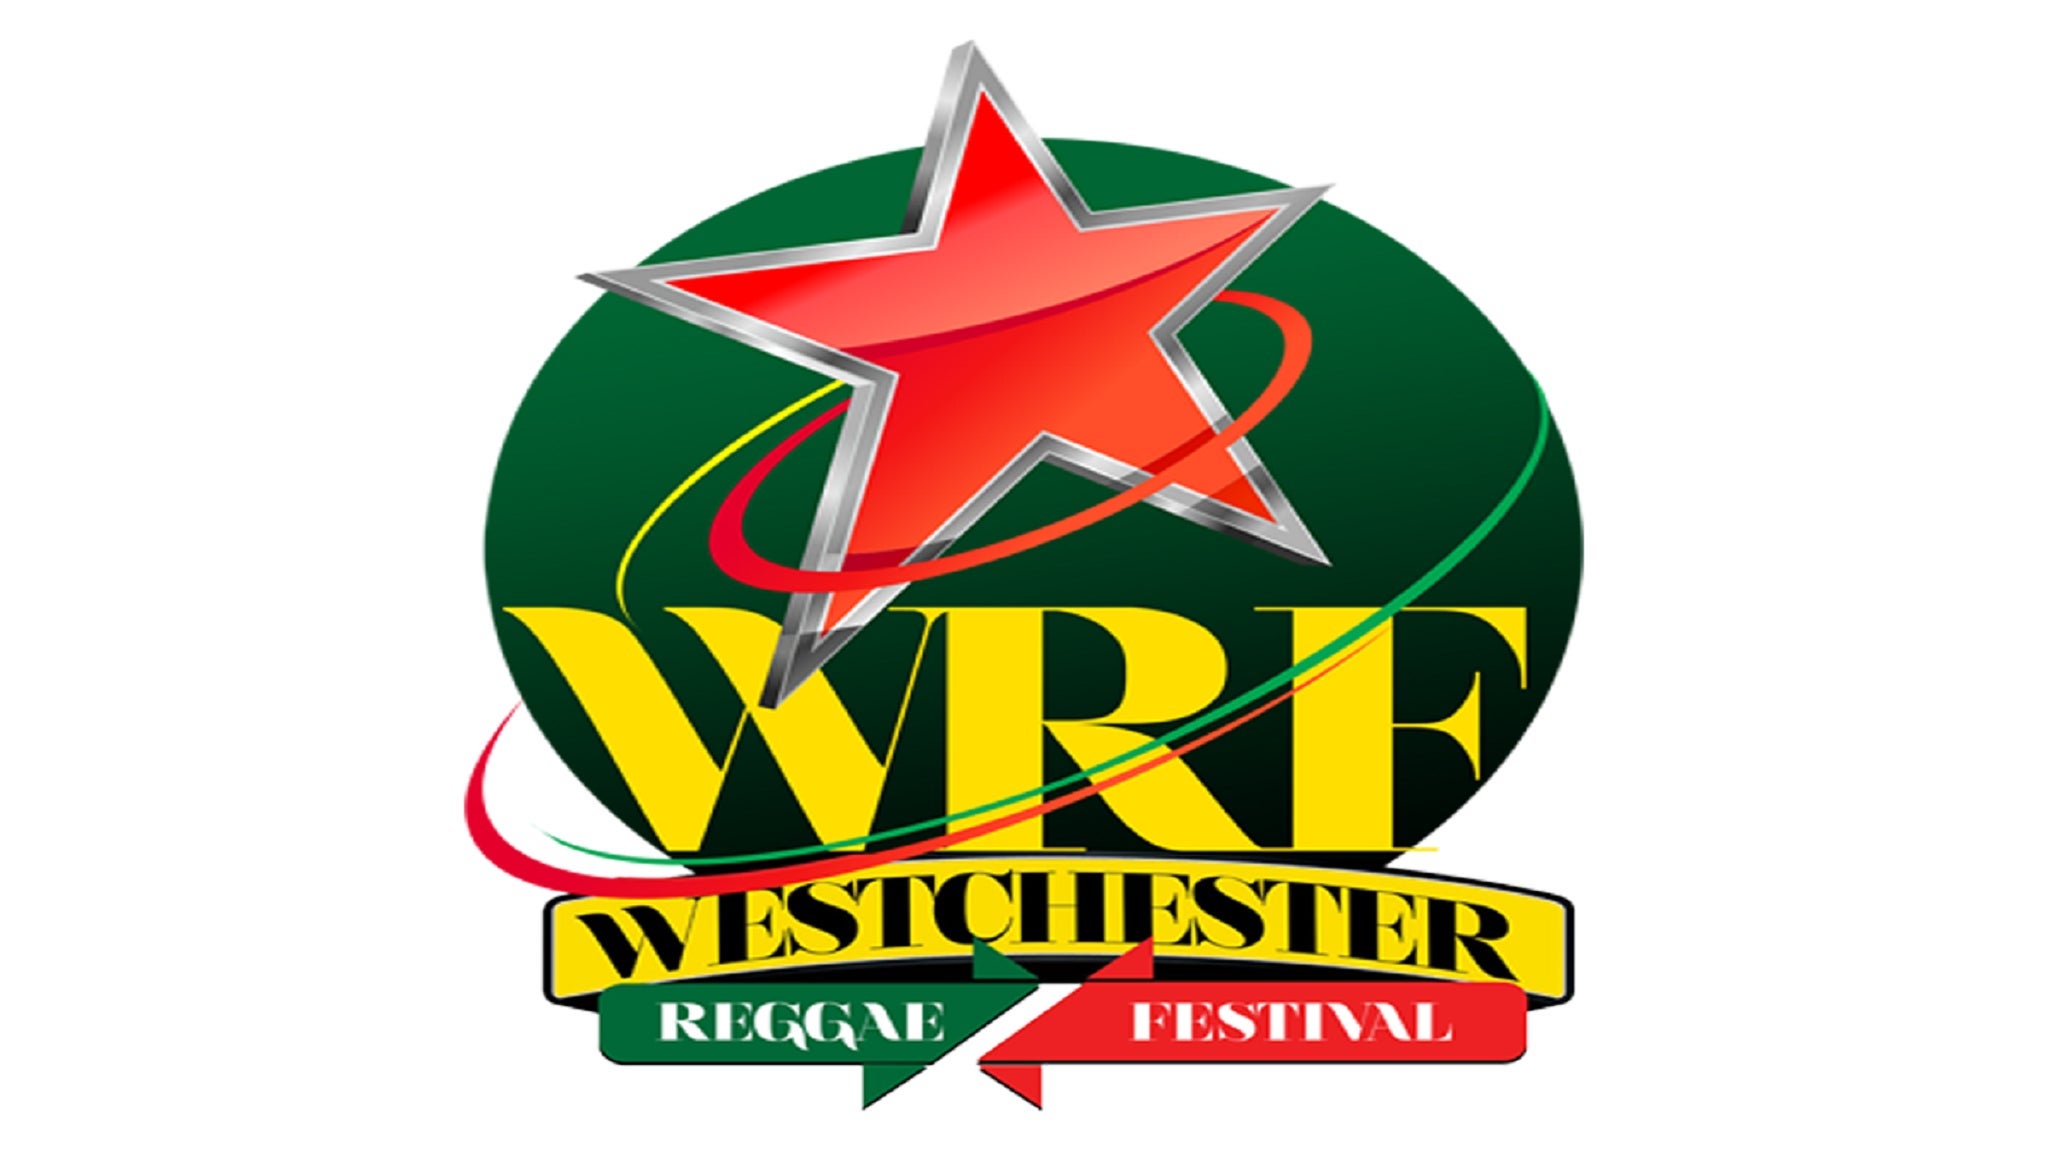 Westchester Reggae Festival at Westchester County Center on Sep 02